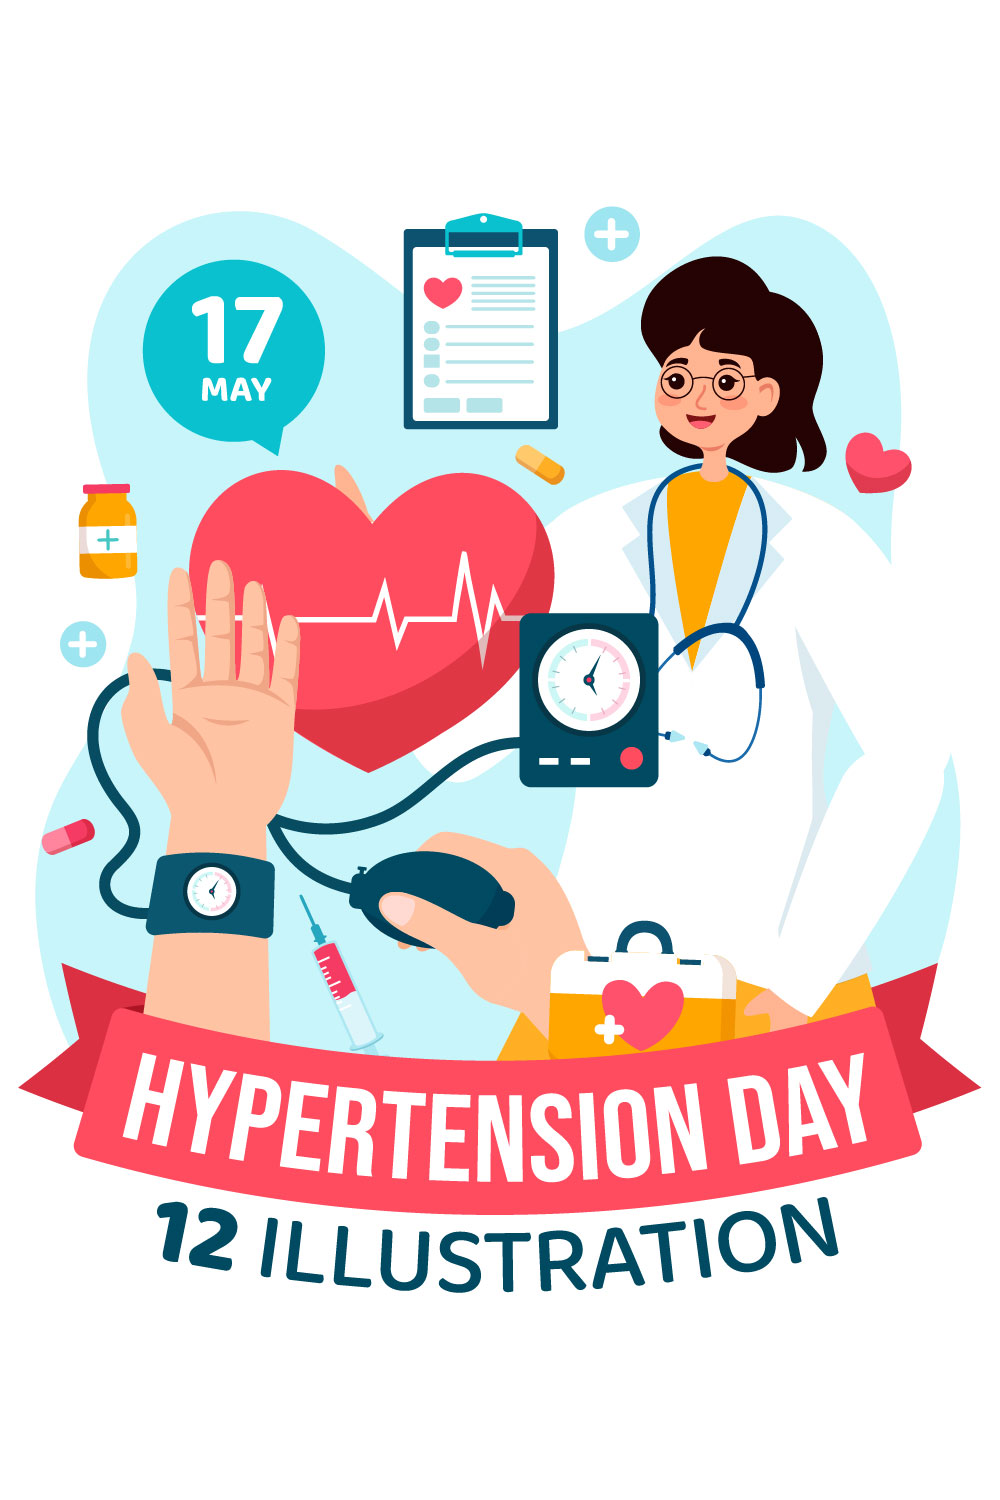 12 World Hypertension Day Illustration pinterest preview image.